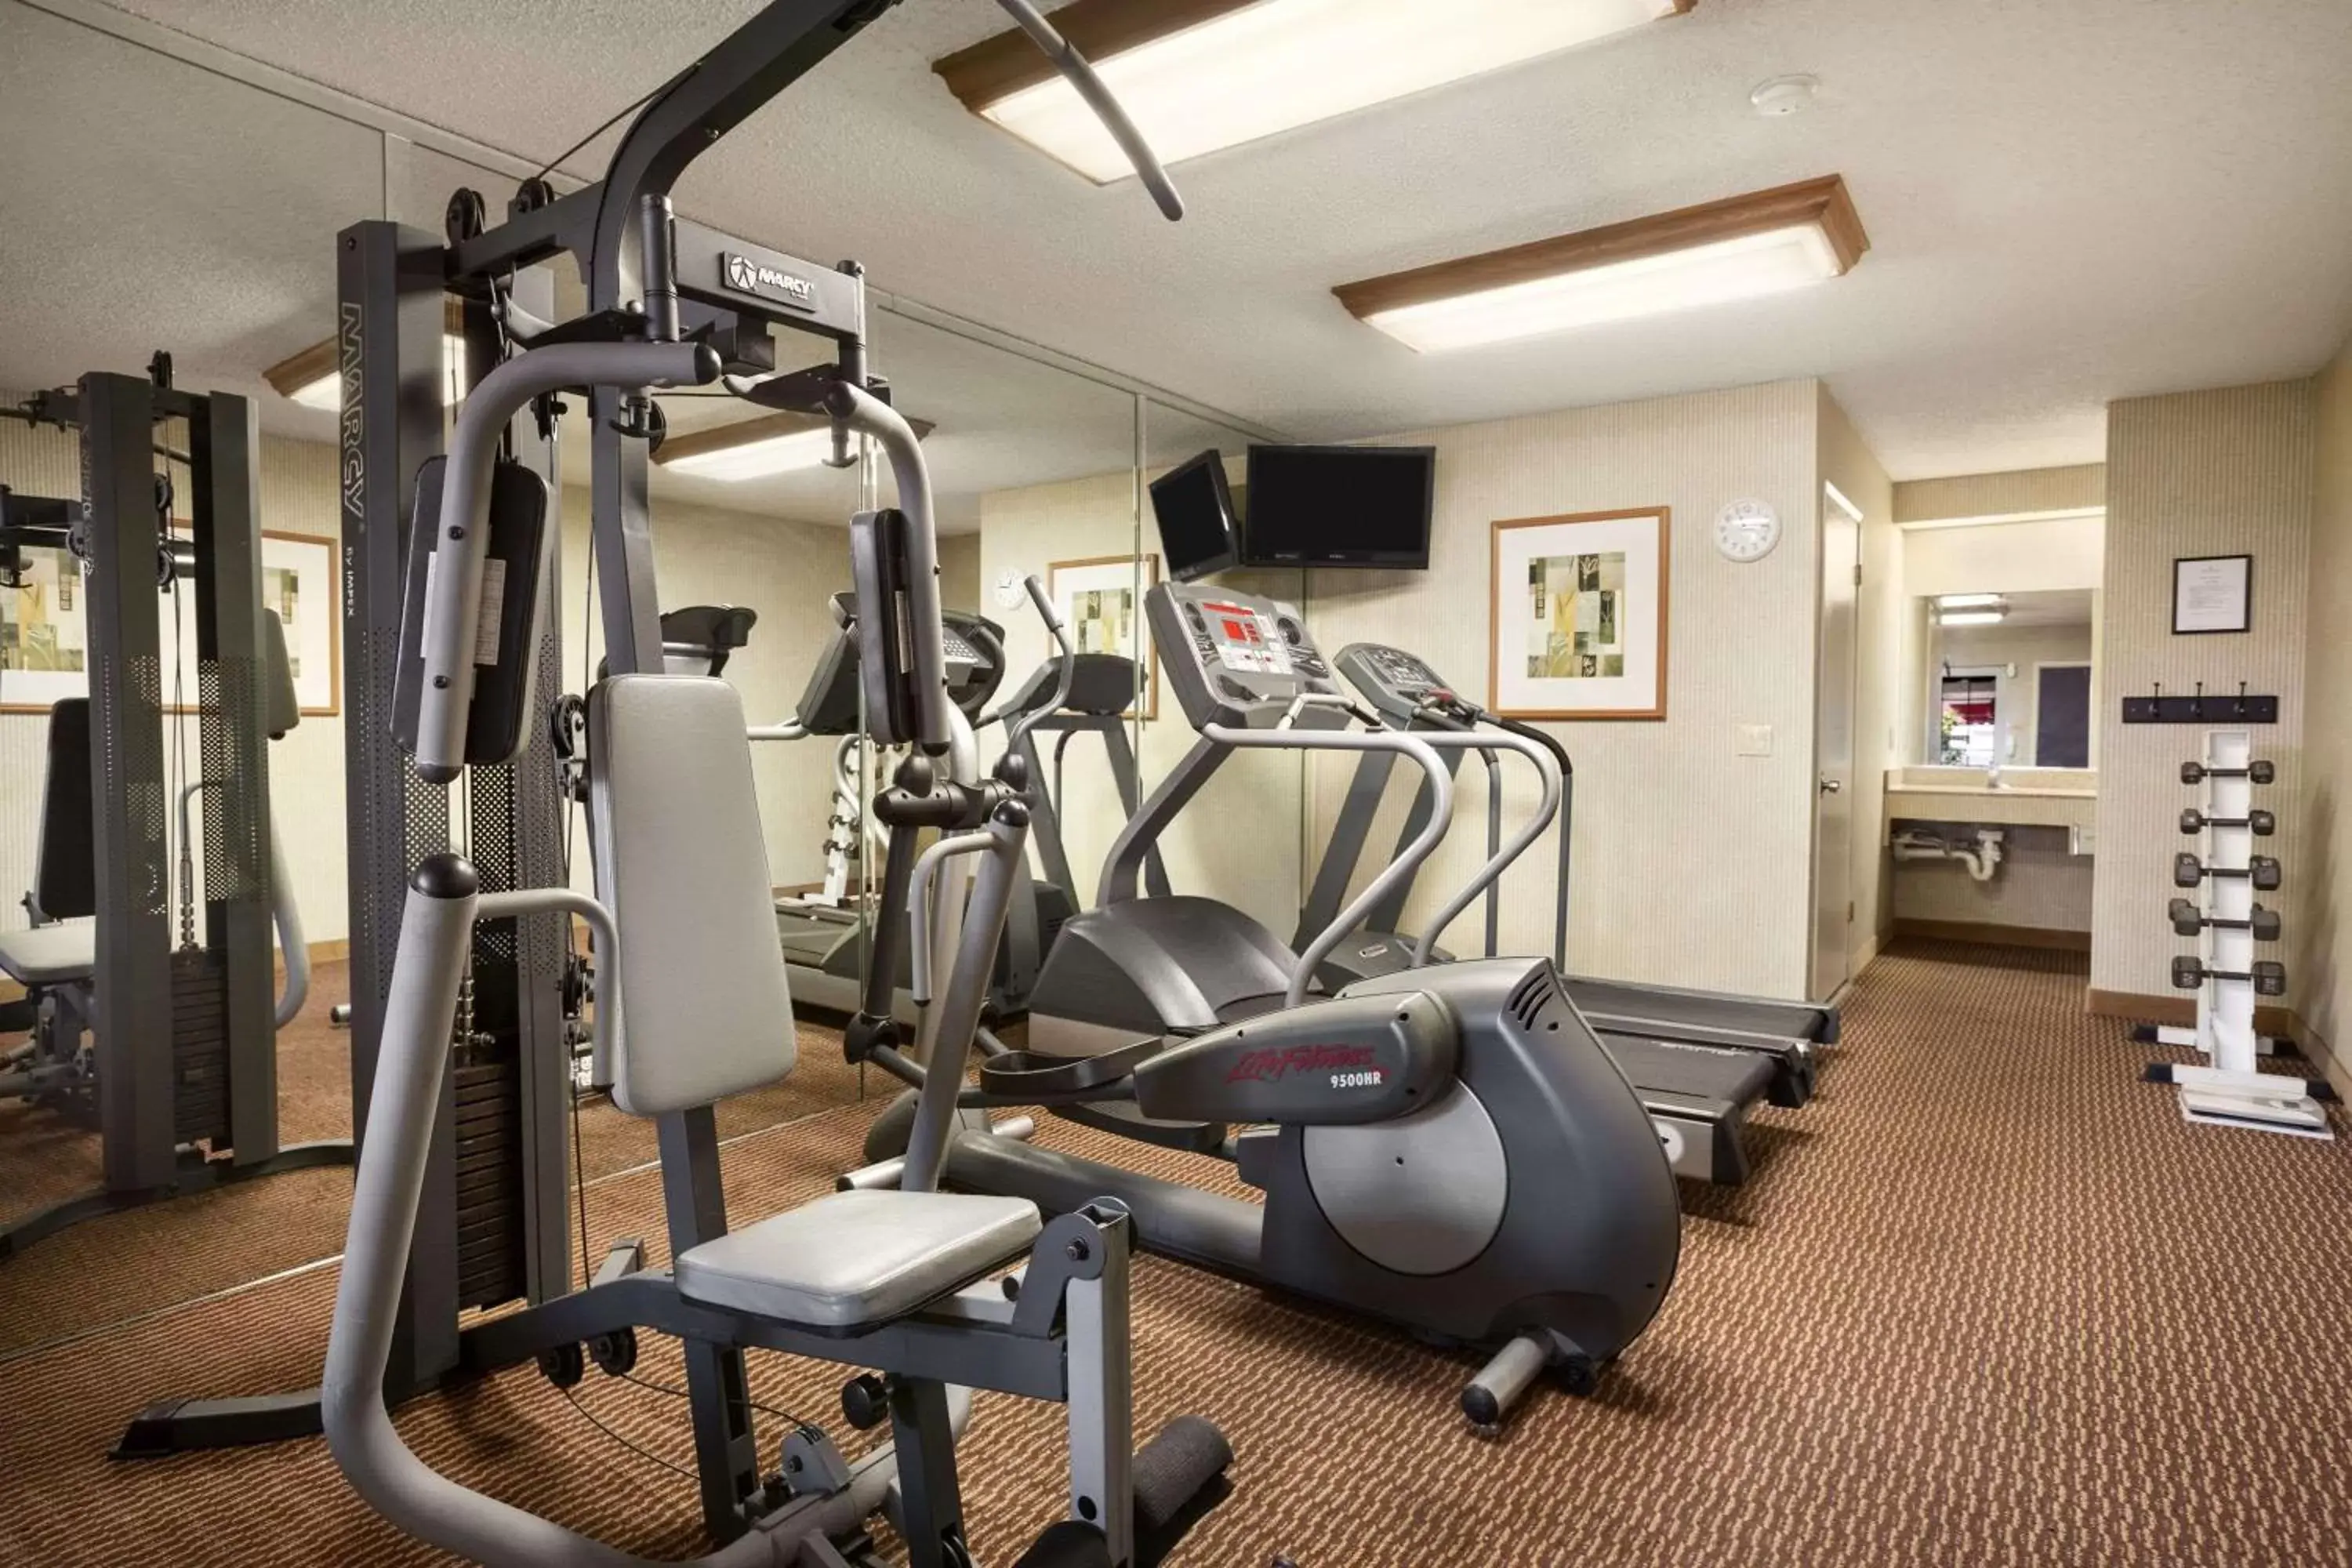 Fitness centre/facilities, Fitness Center/Facilities in Ramada by Wyndham Costa Mesa/Newport Beach